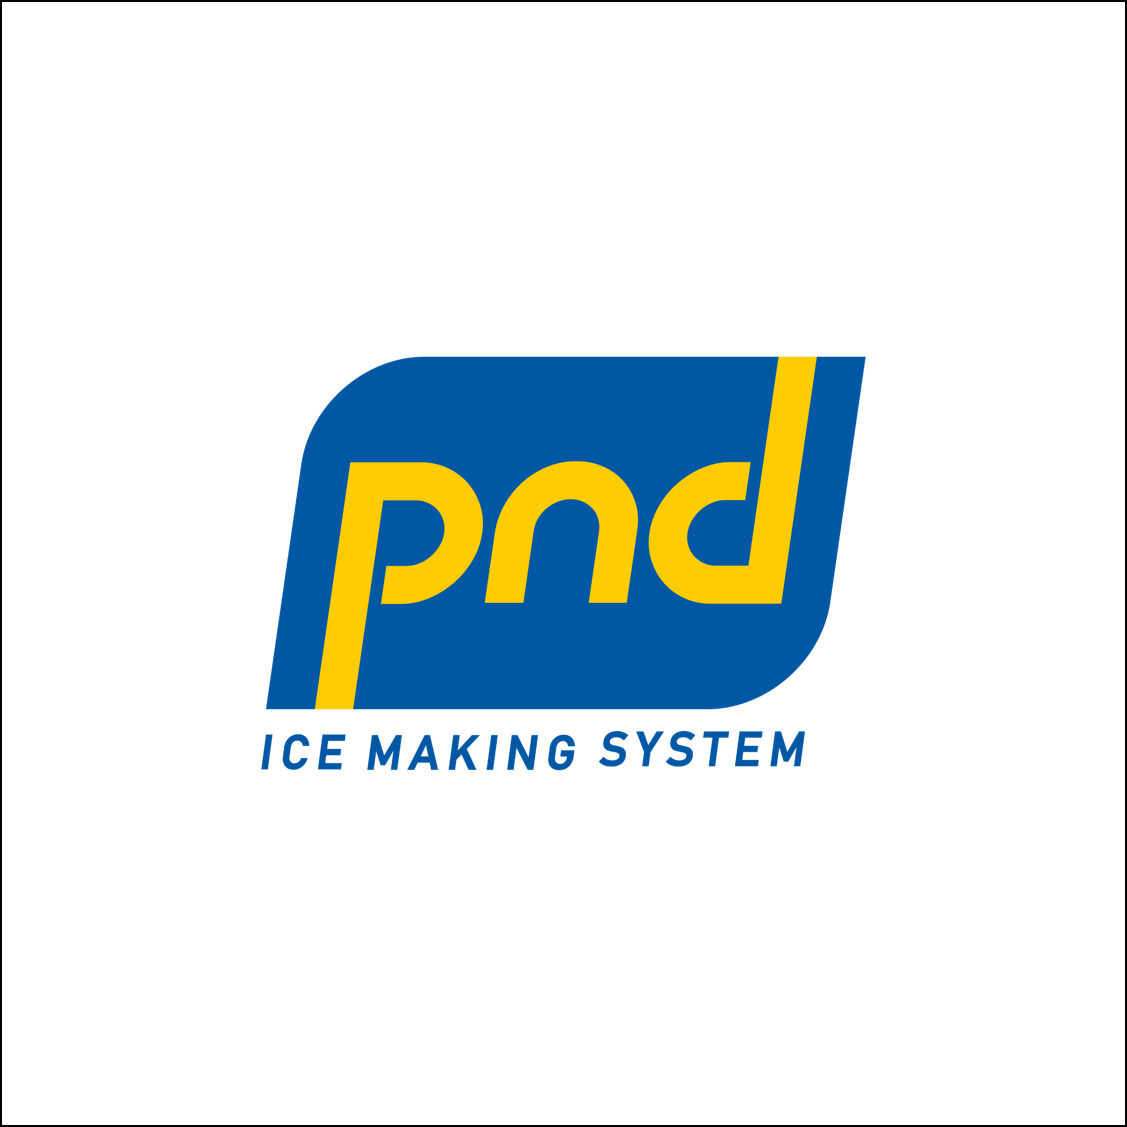 Pnd Ice Making System